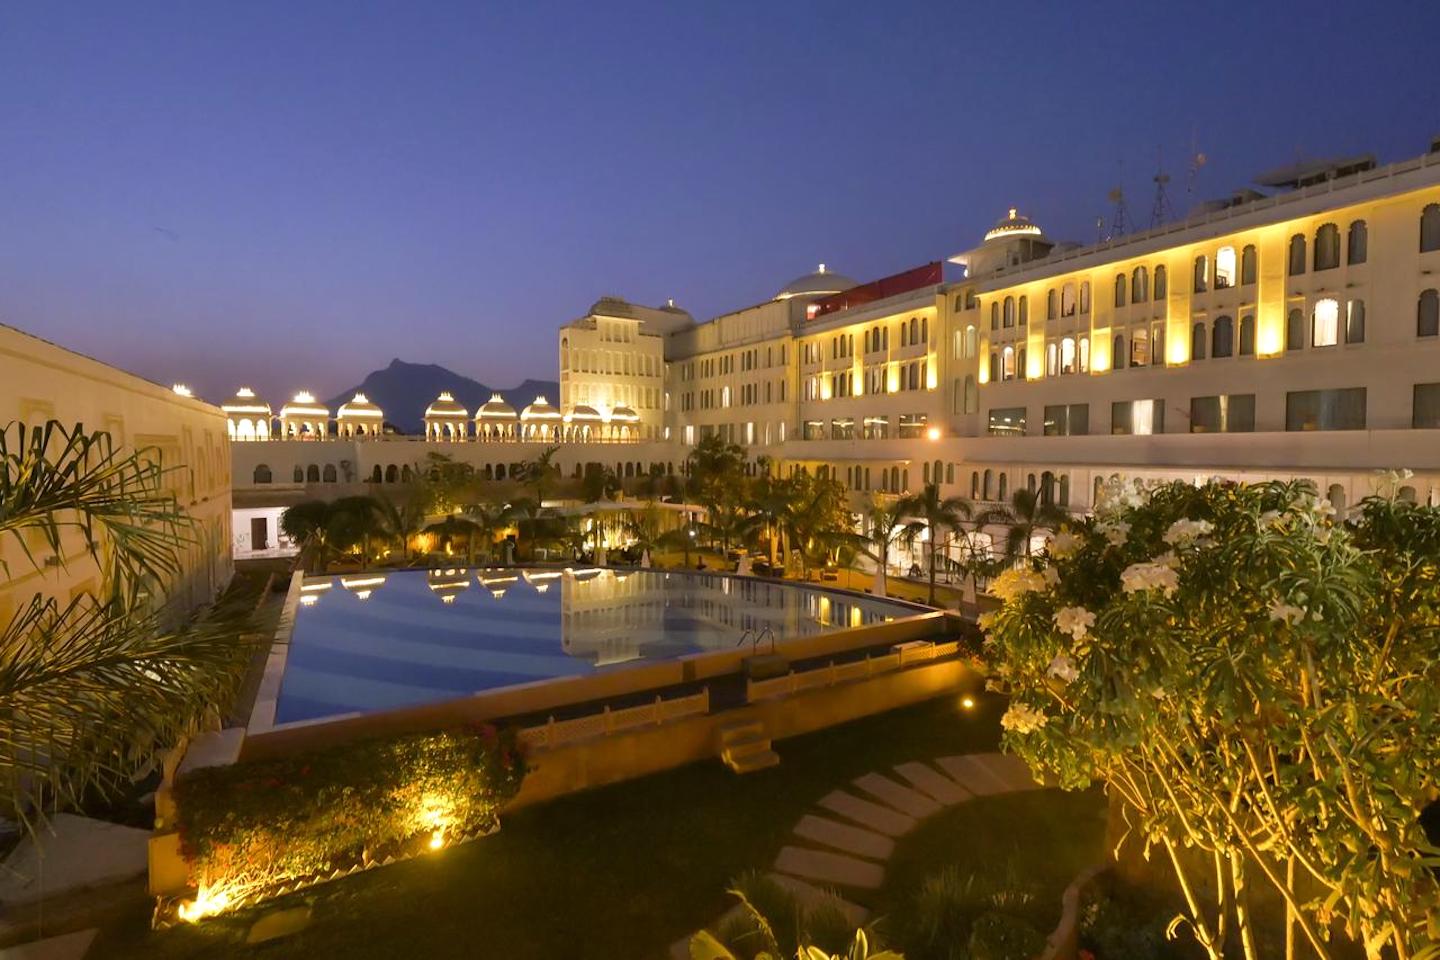 Radisson Blu Palace Resort Spa best hotels in Udaipur India